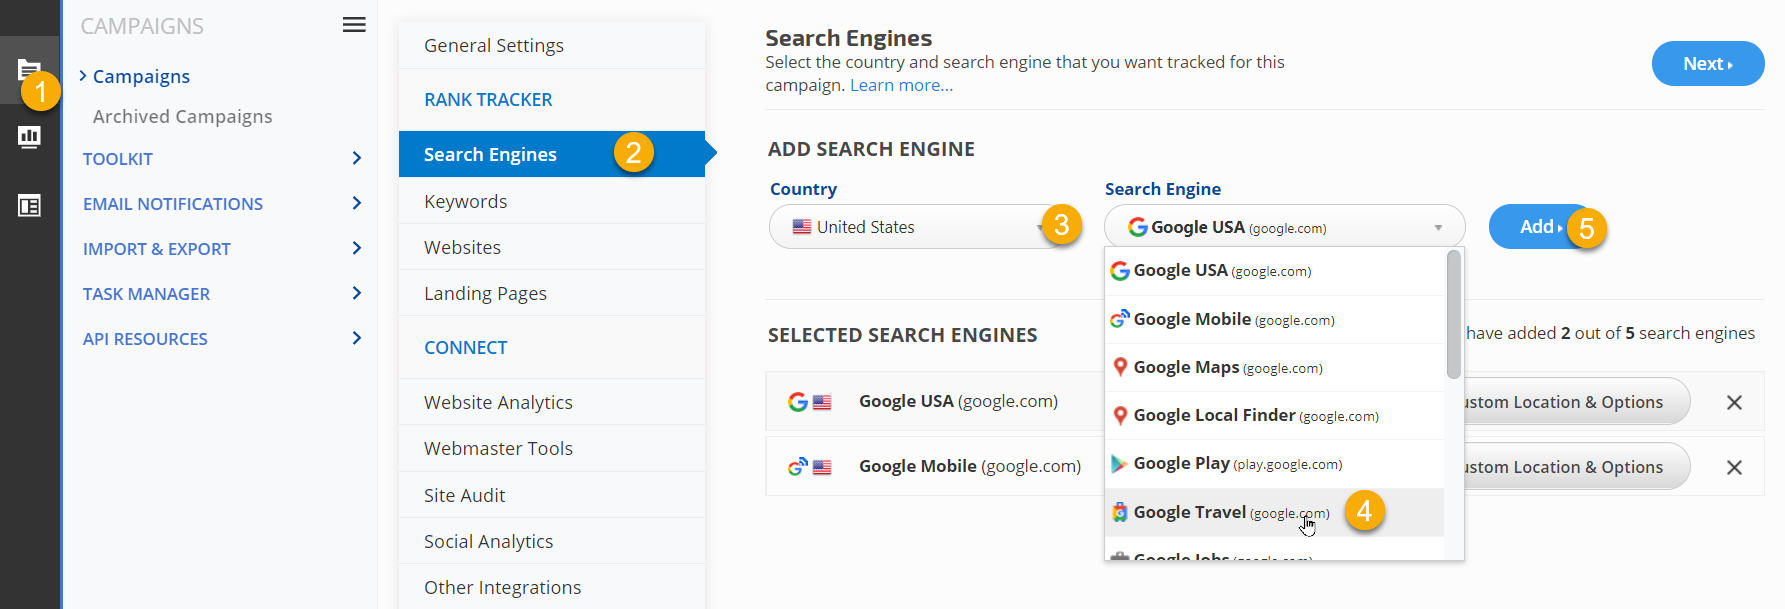 Add Travel Search Engine